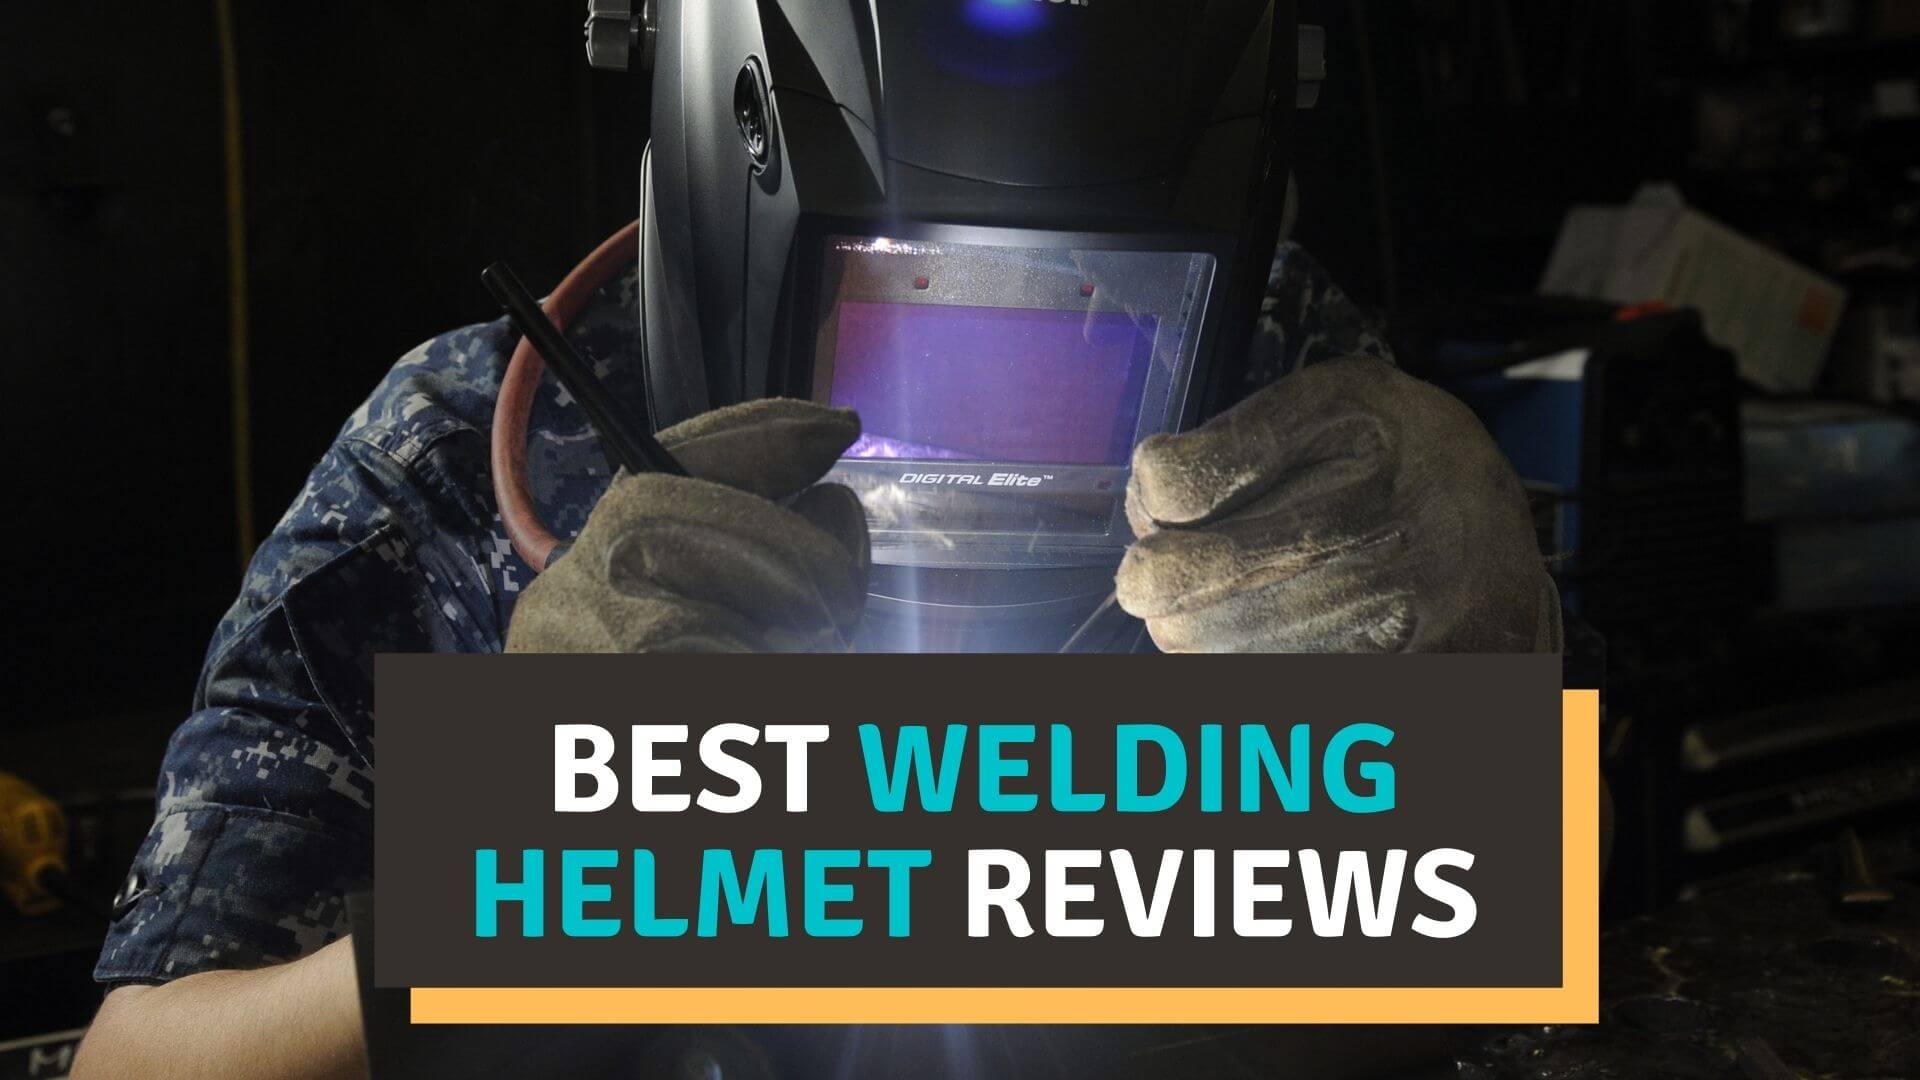 10 Best Welding Helmet Reviews 2022 – Our Top Picks